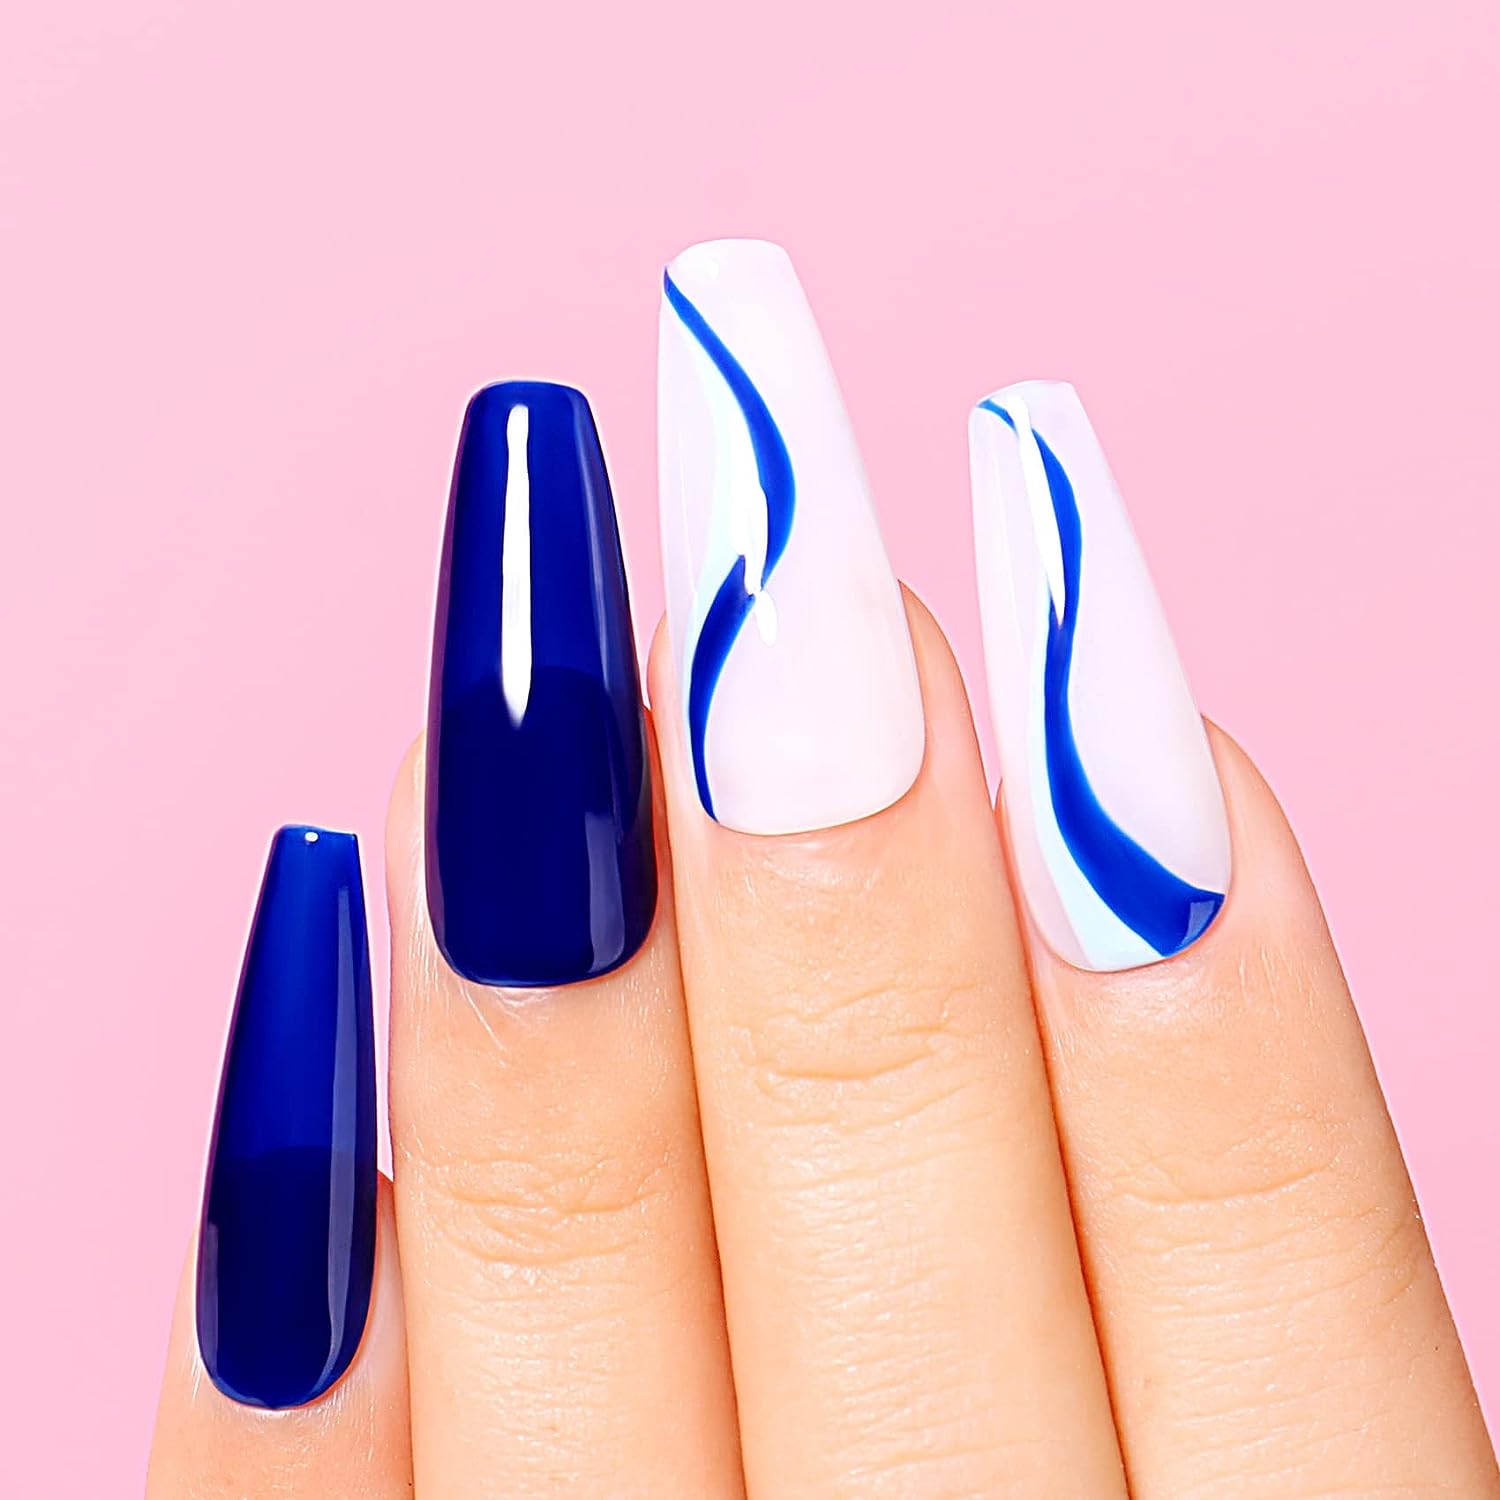 Blue Gel Nails